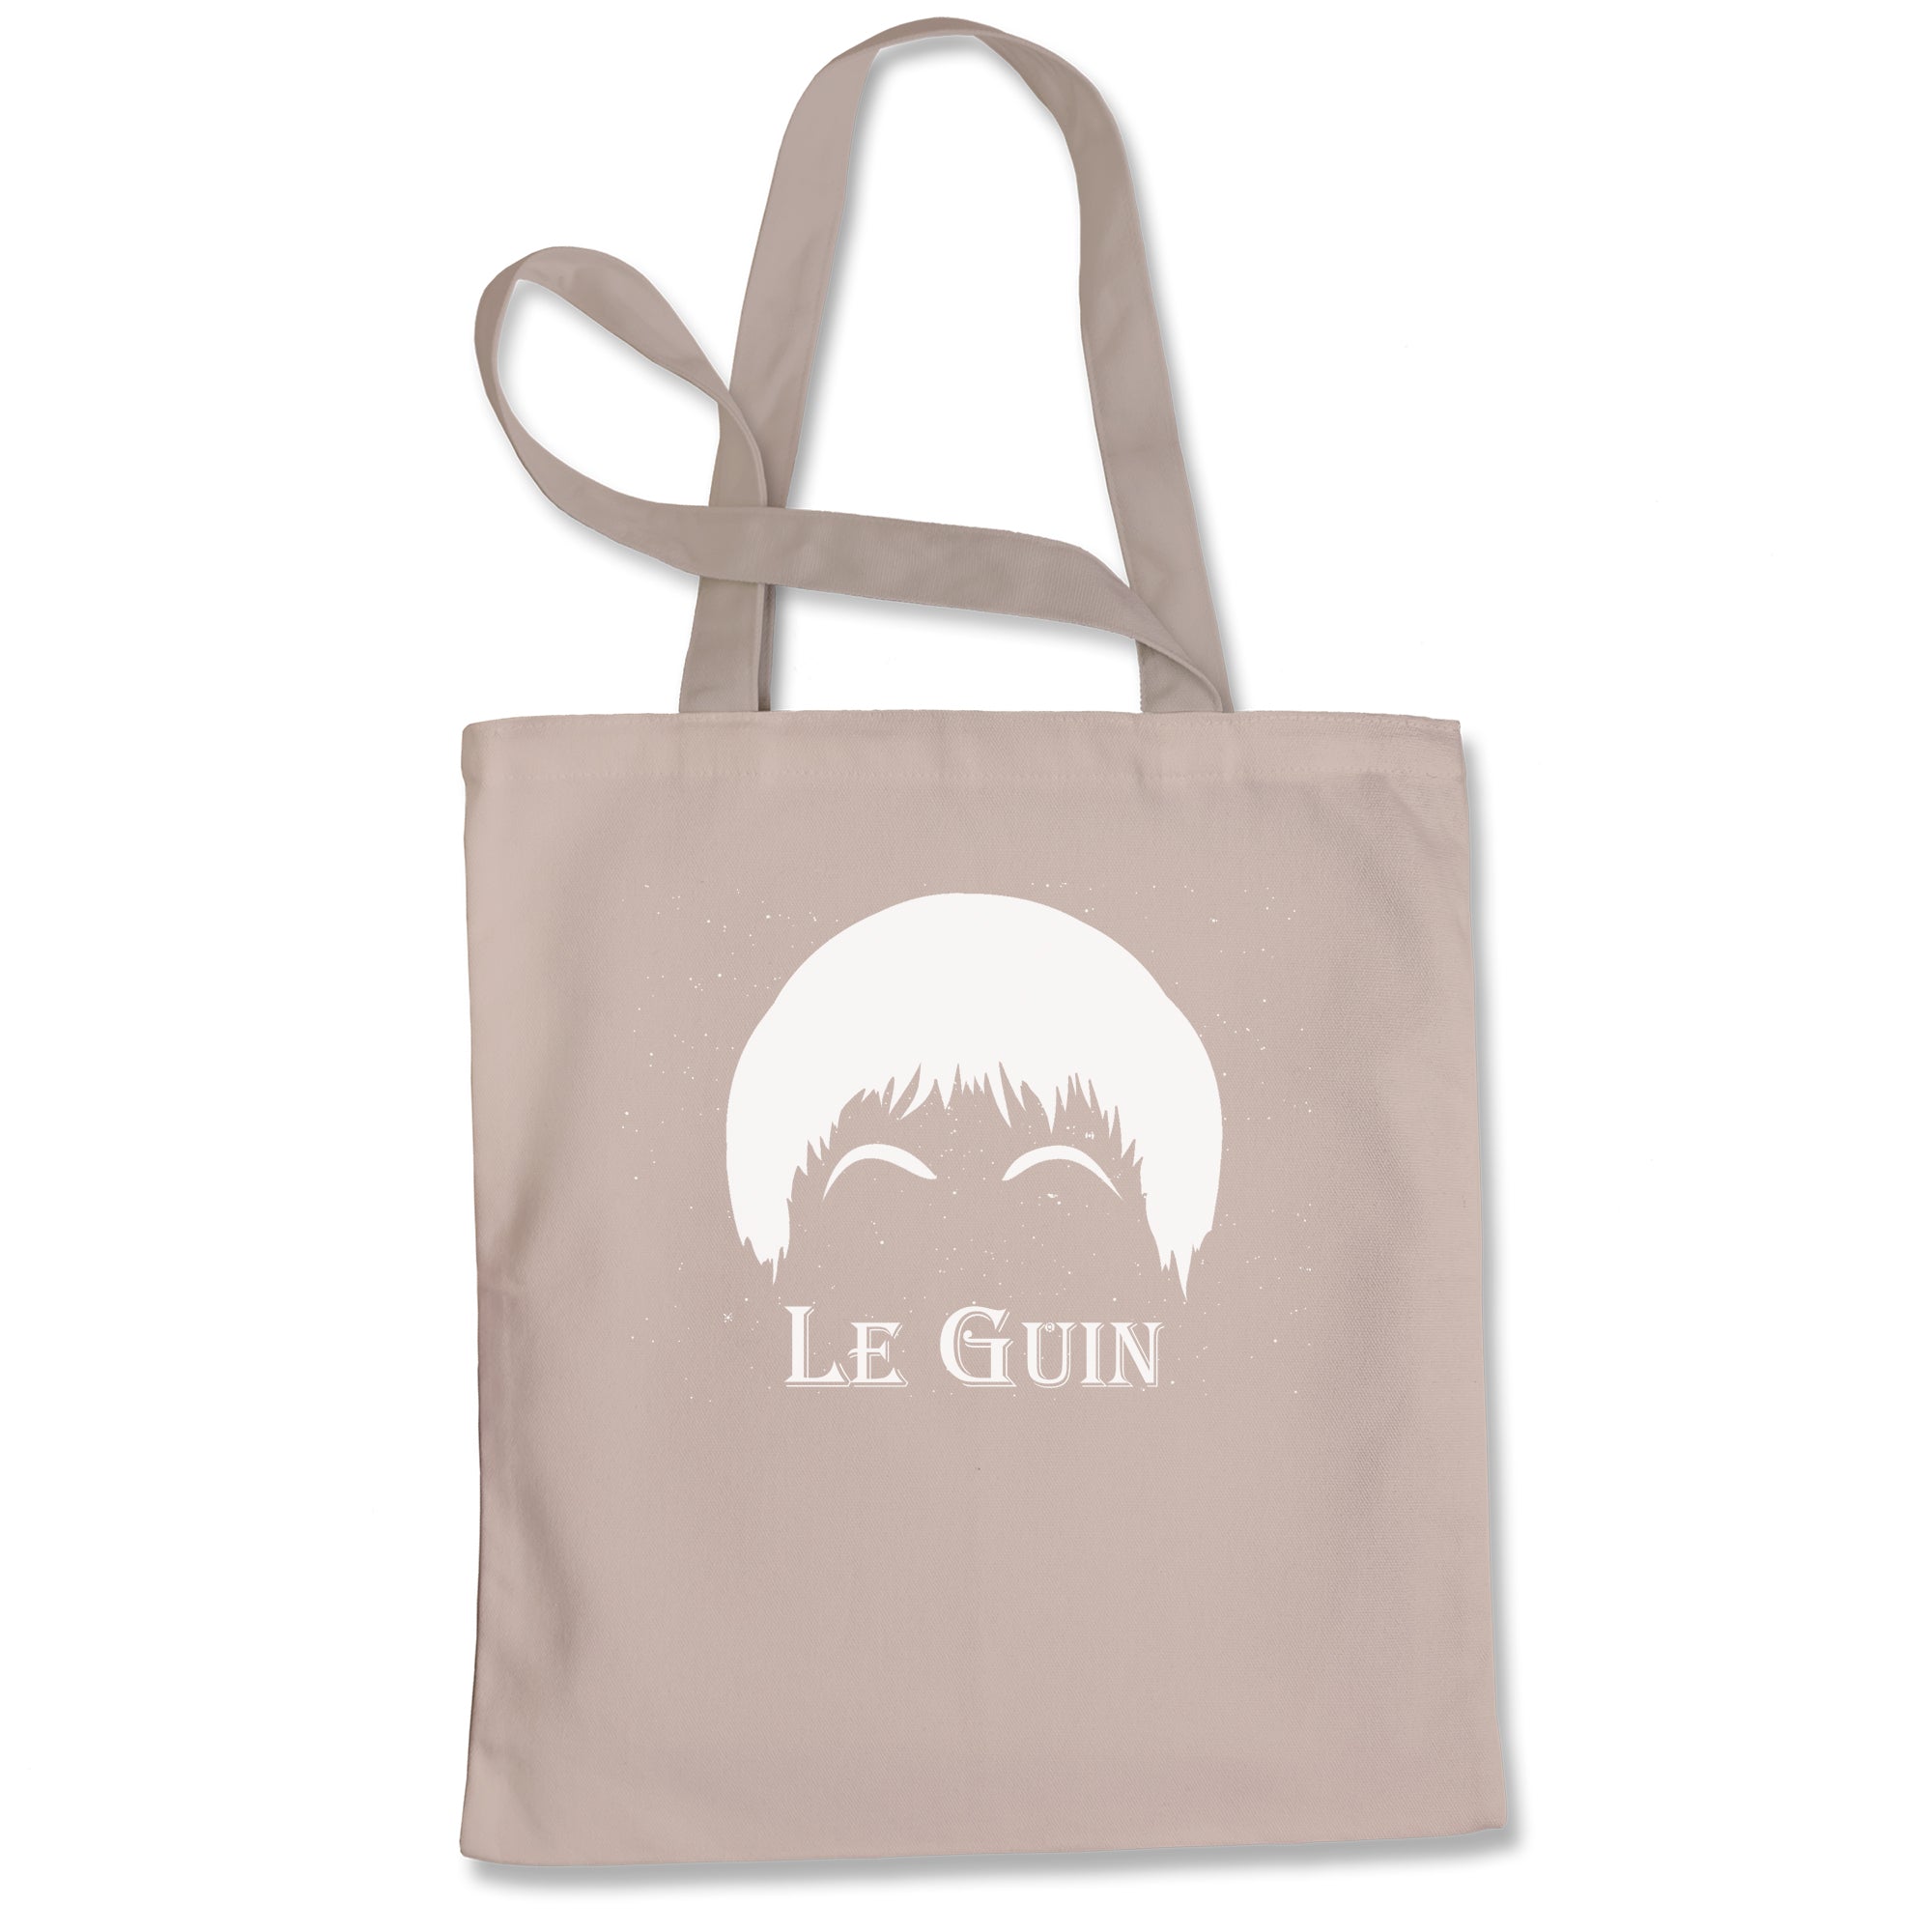 In Memory of Le Guin Tribute Tote Bag